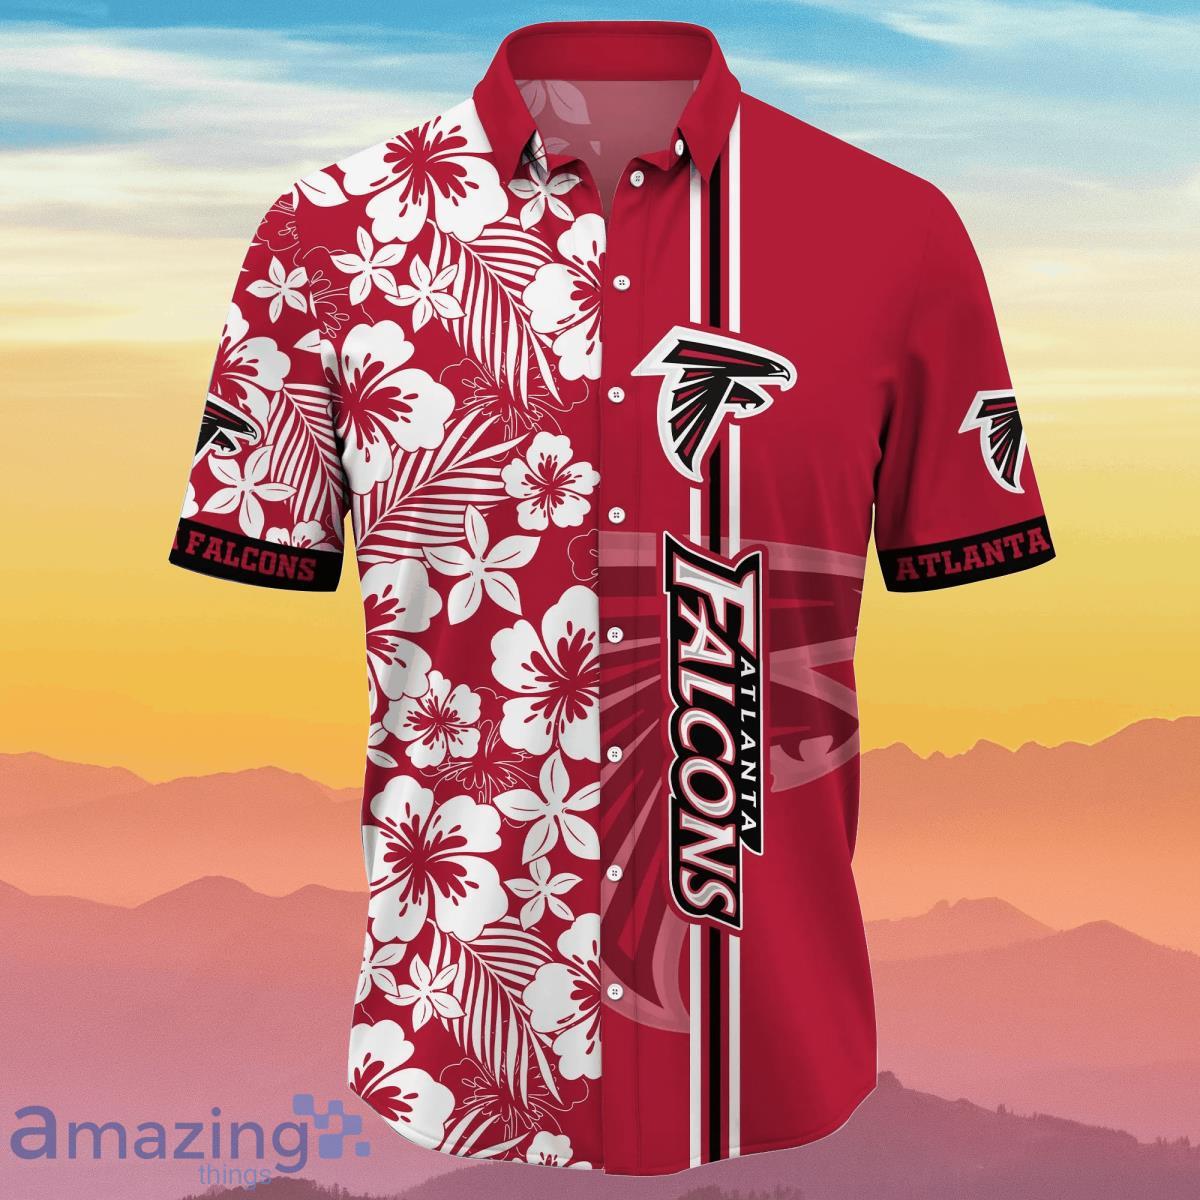 Atlanta Falcons NFL Flower Hawaiian Shirt Unique Gift For Fans